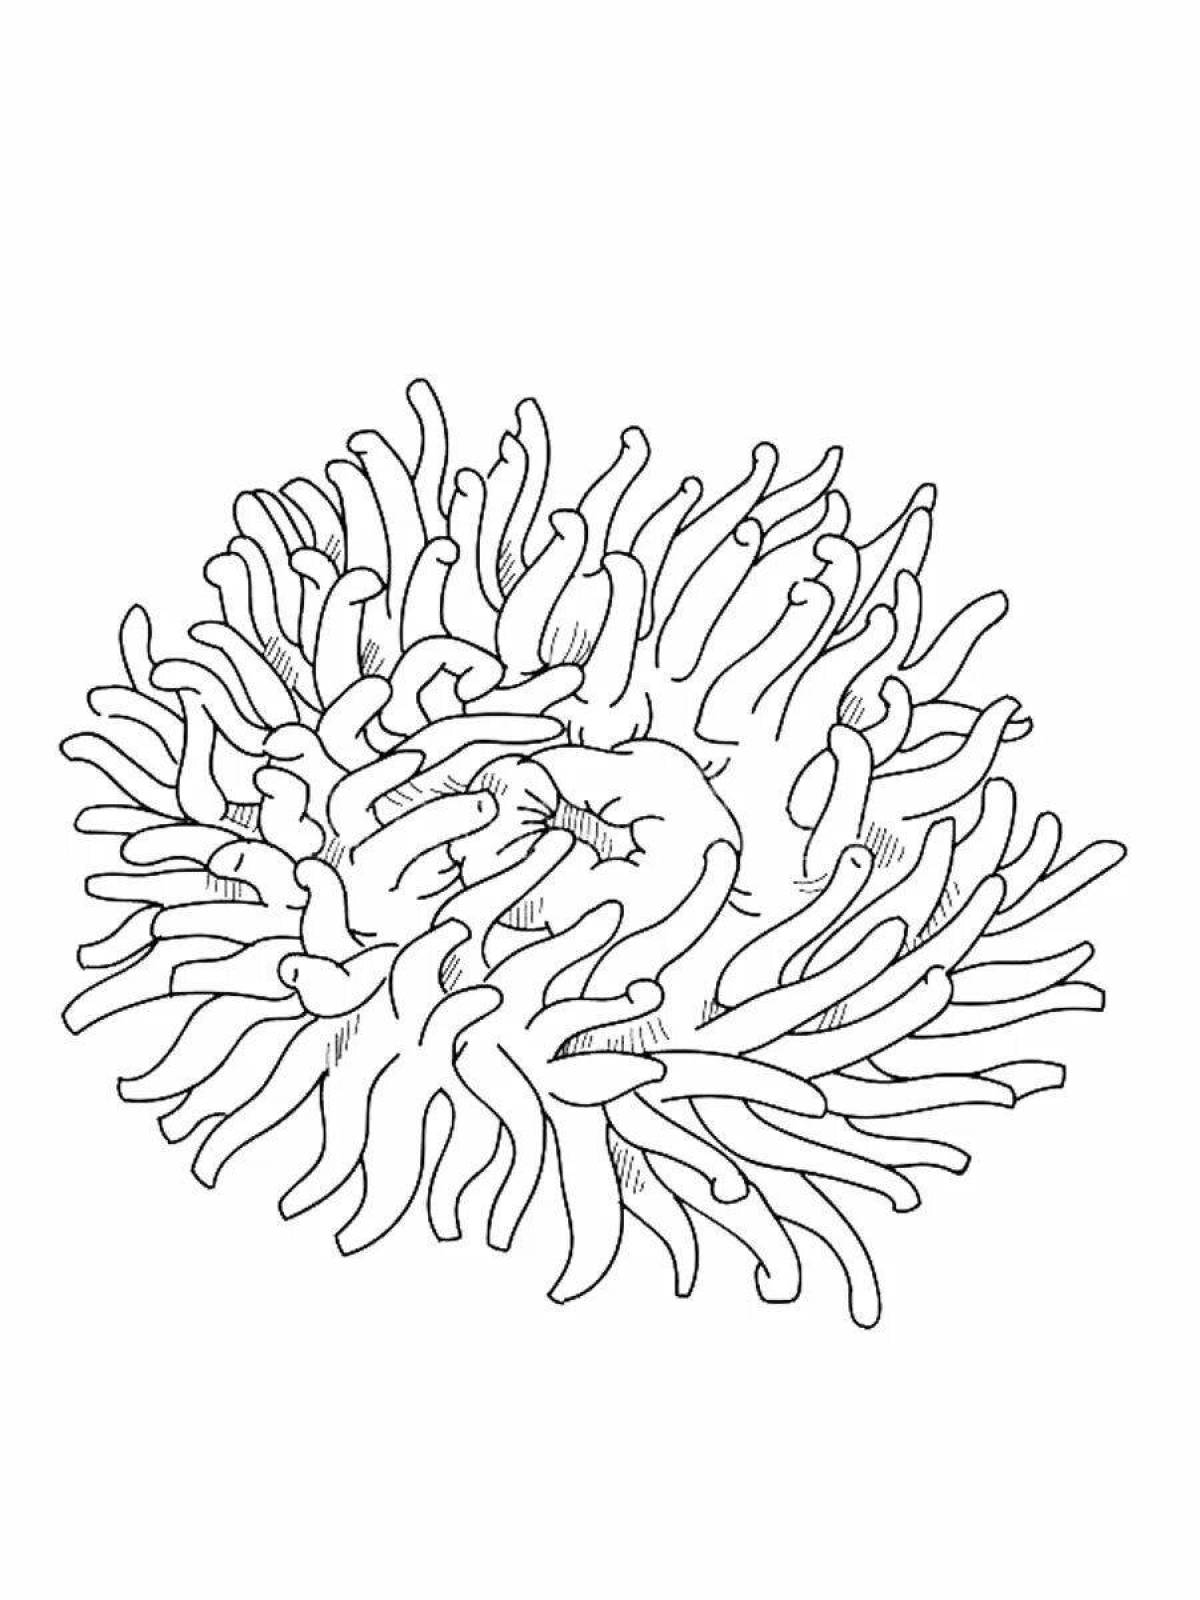 Charming sea anemones